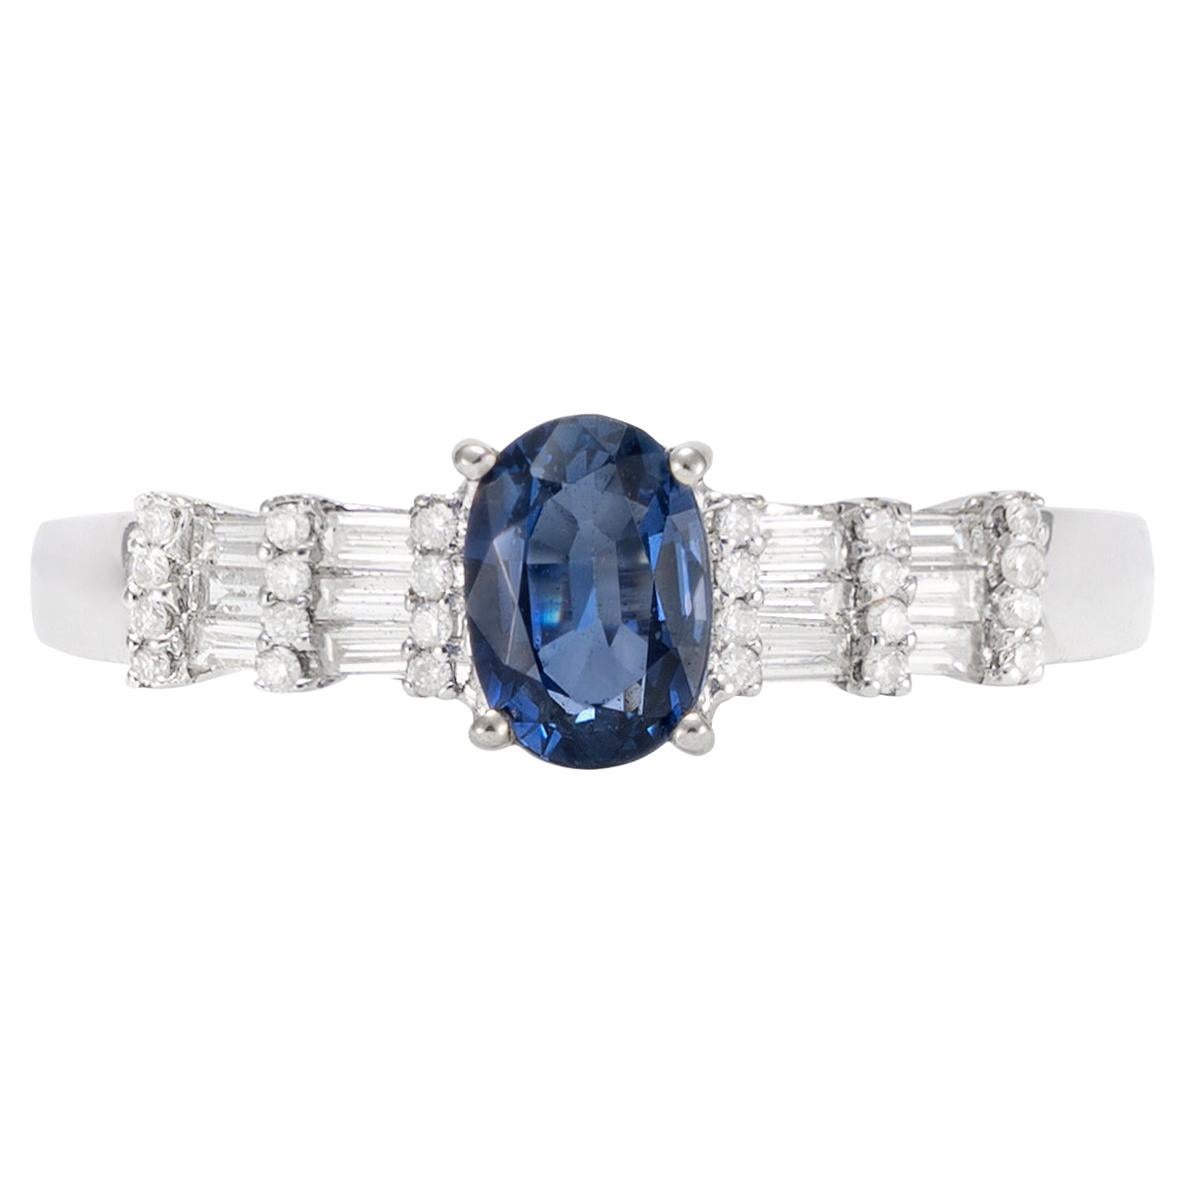 0.8 Carat Blue Sapphire Ring with Diamond in 18 Karat White Gold